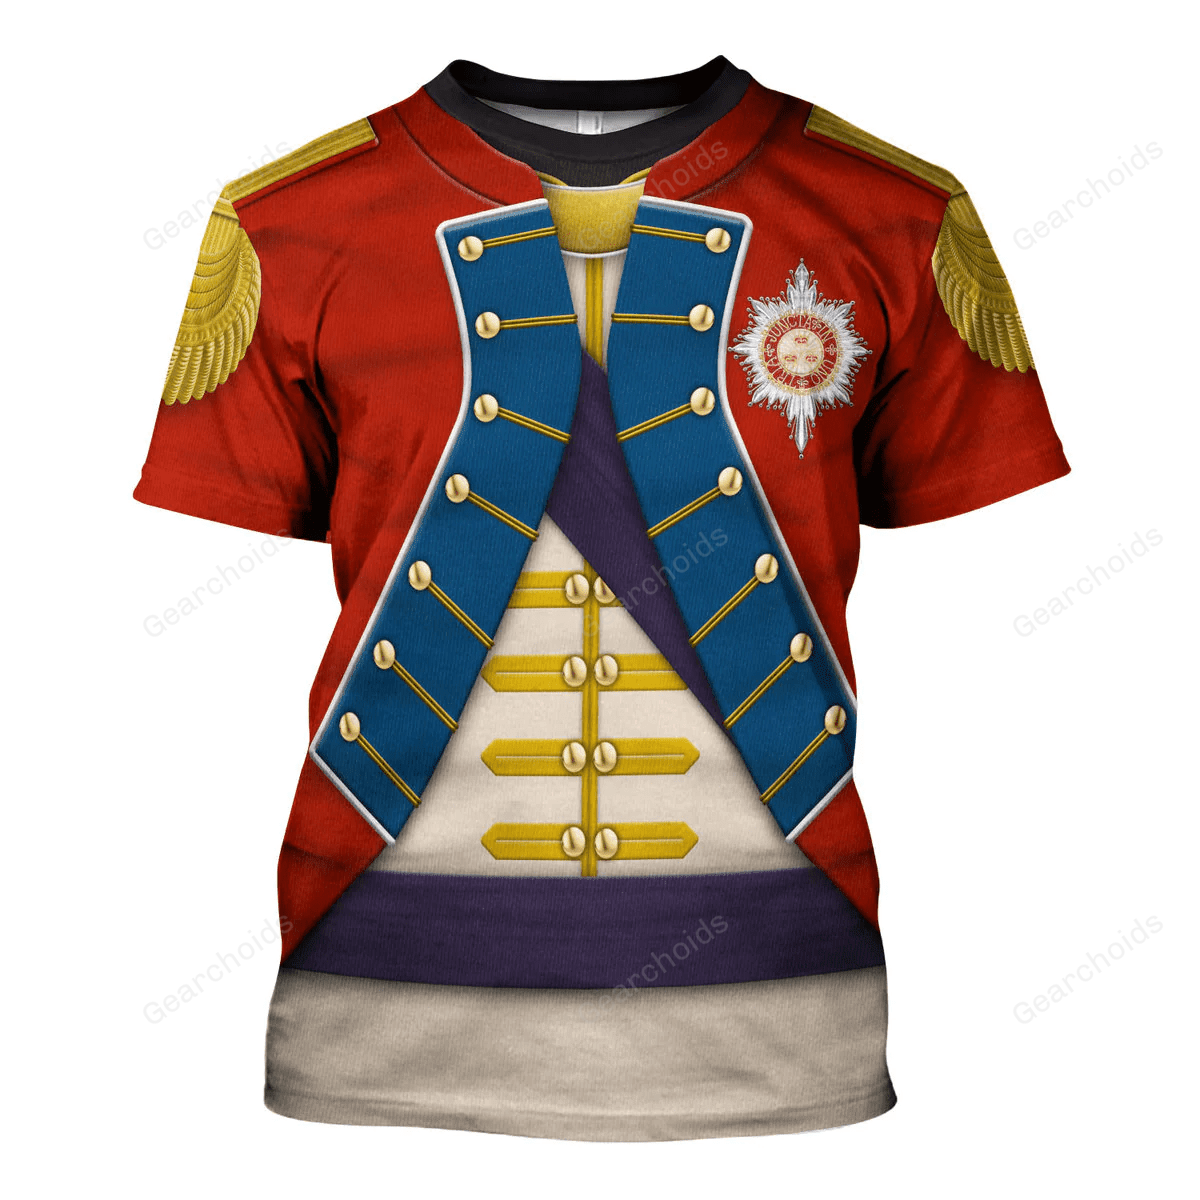 General Washington - The American Revolution Uniform T-Shirt